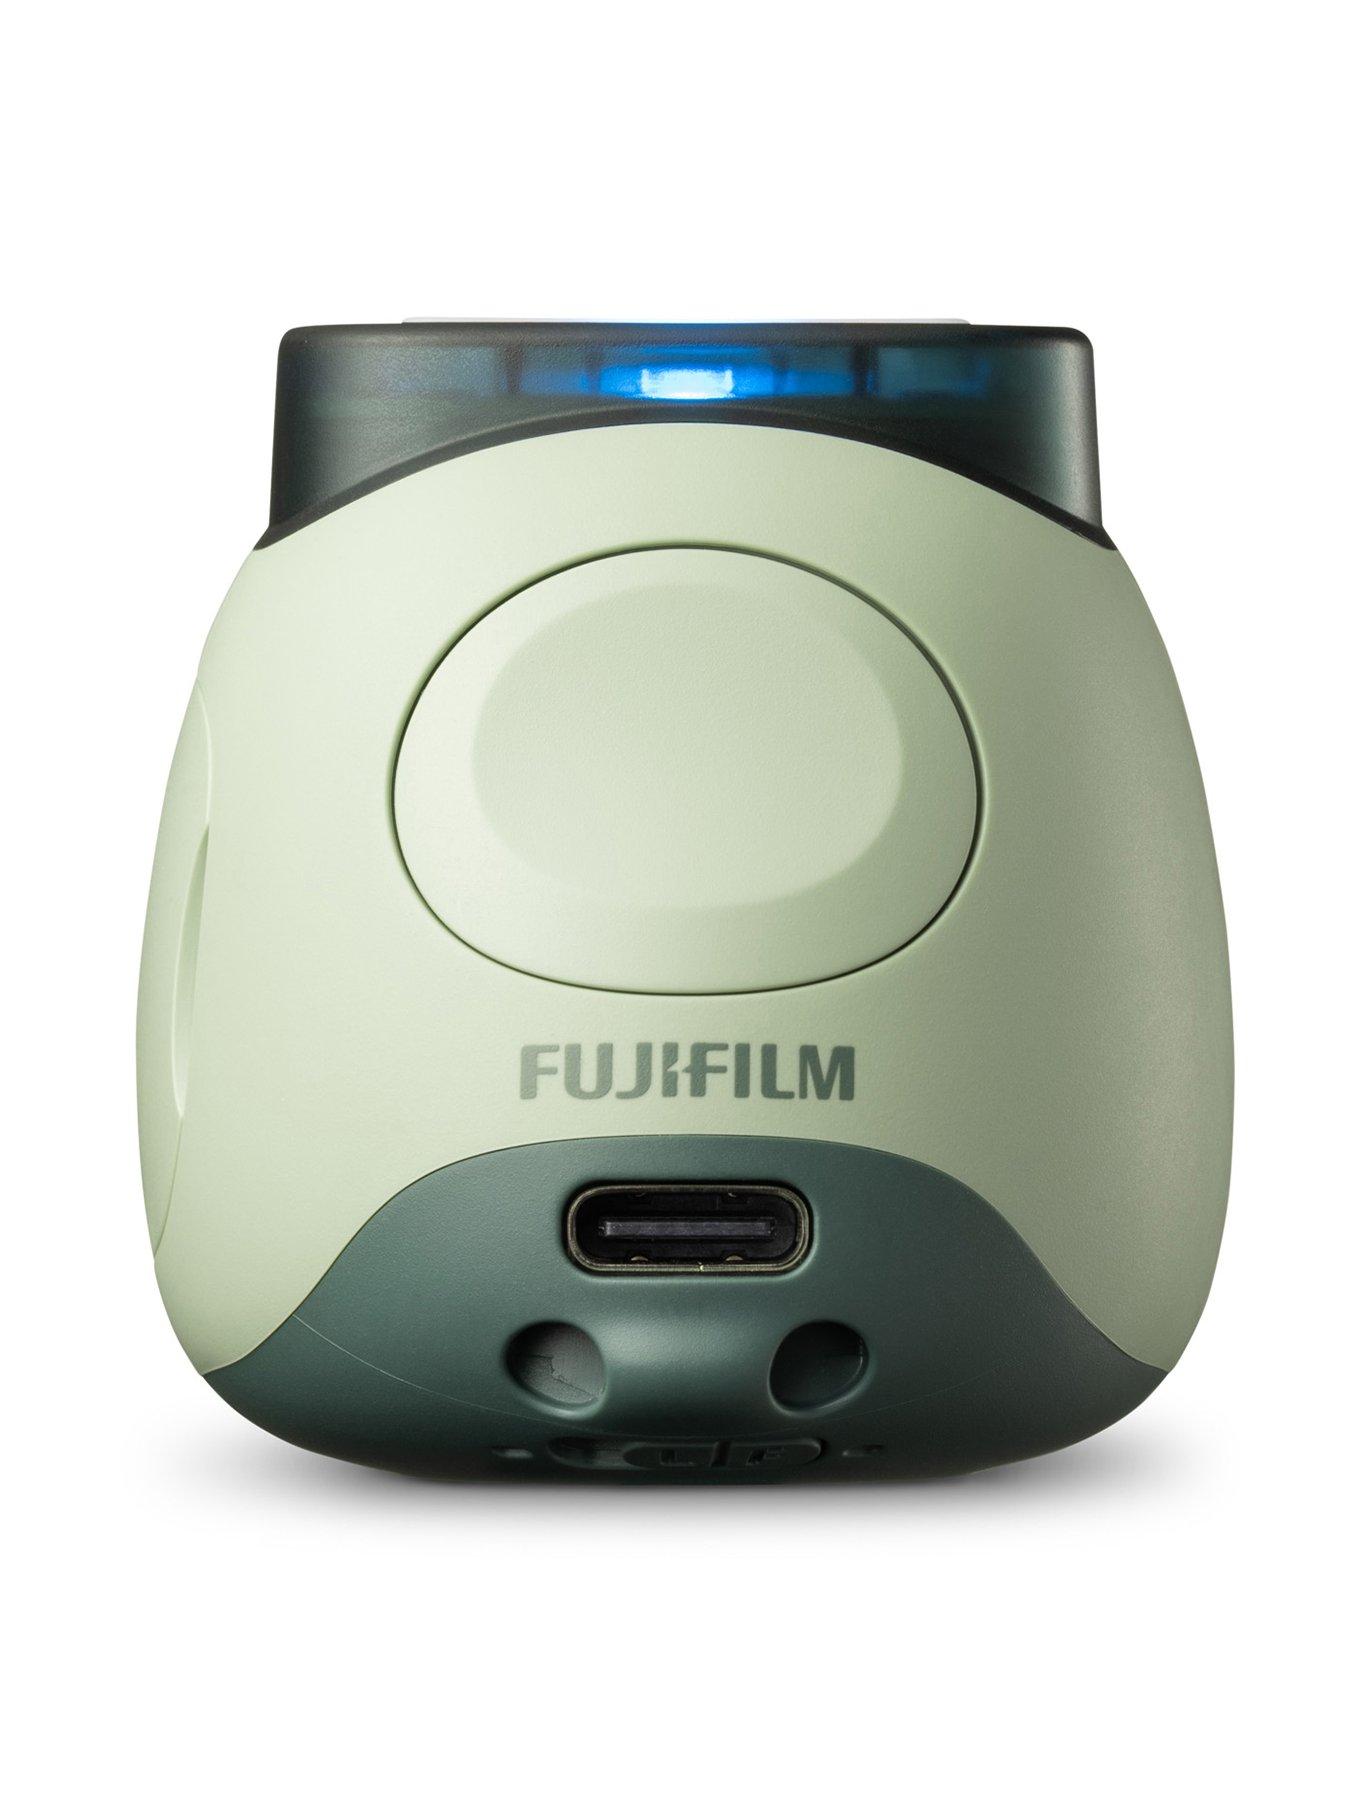 Fujifilm INSTAX PAL digital camera, Pistachio Green